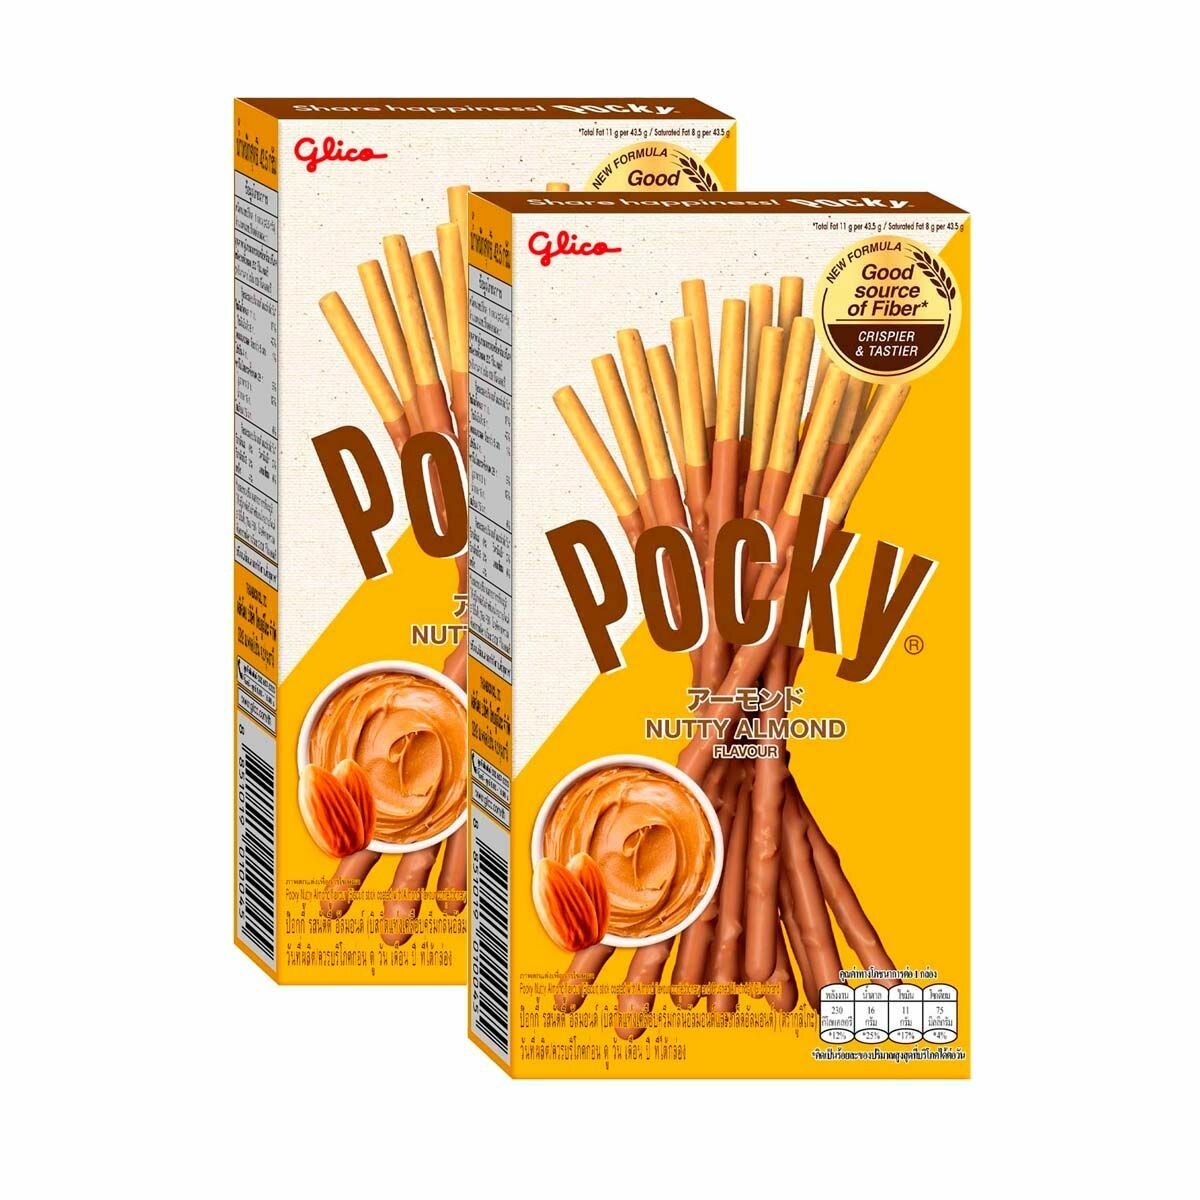 Бисквитные палочки Pocky Nutty Almond со вкусом орехов и миндаля (Таиланд), 36 г (2 шт)